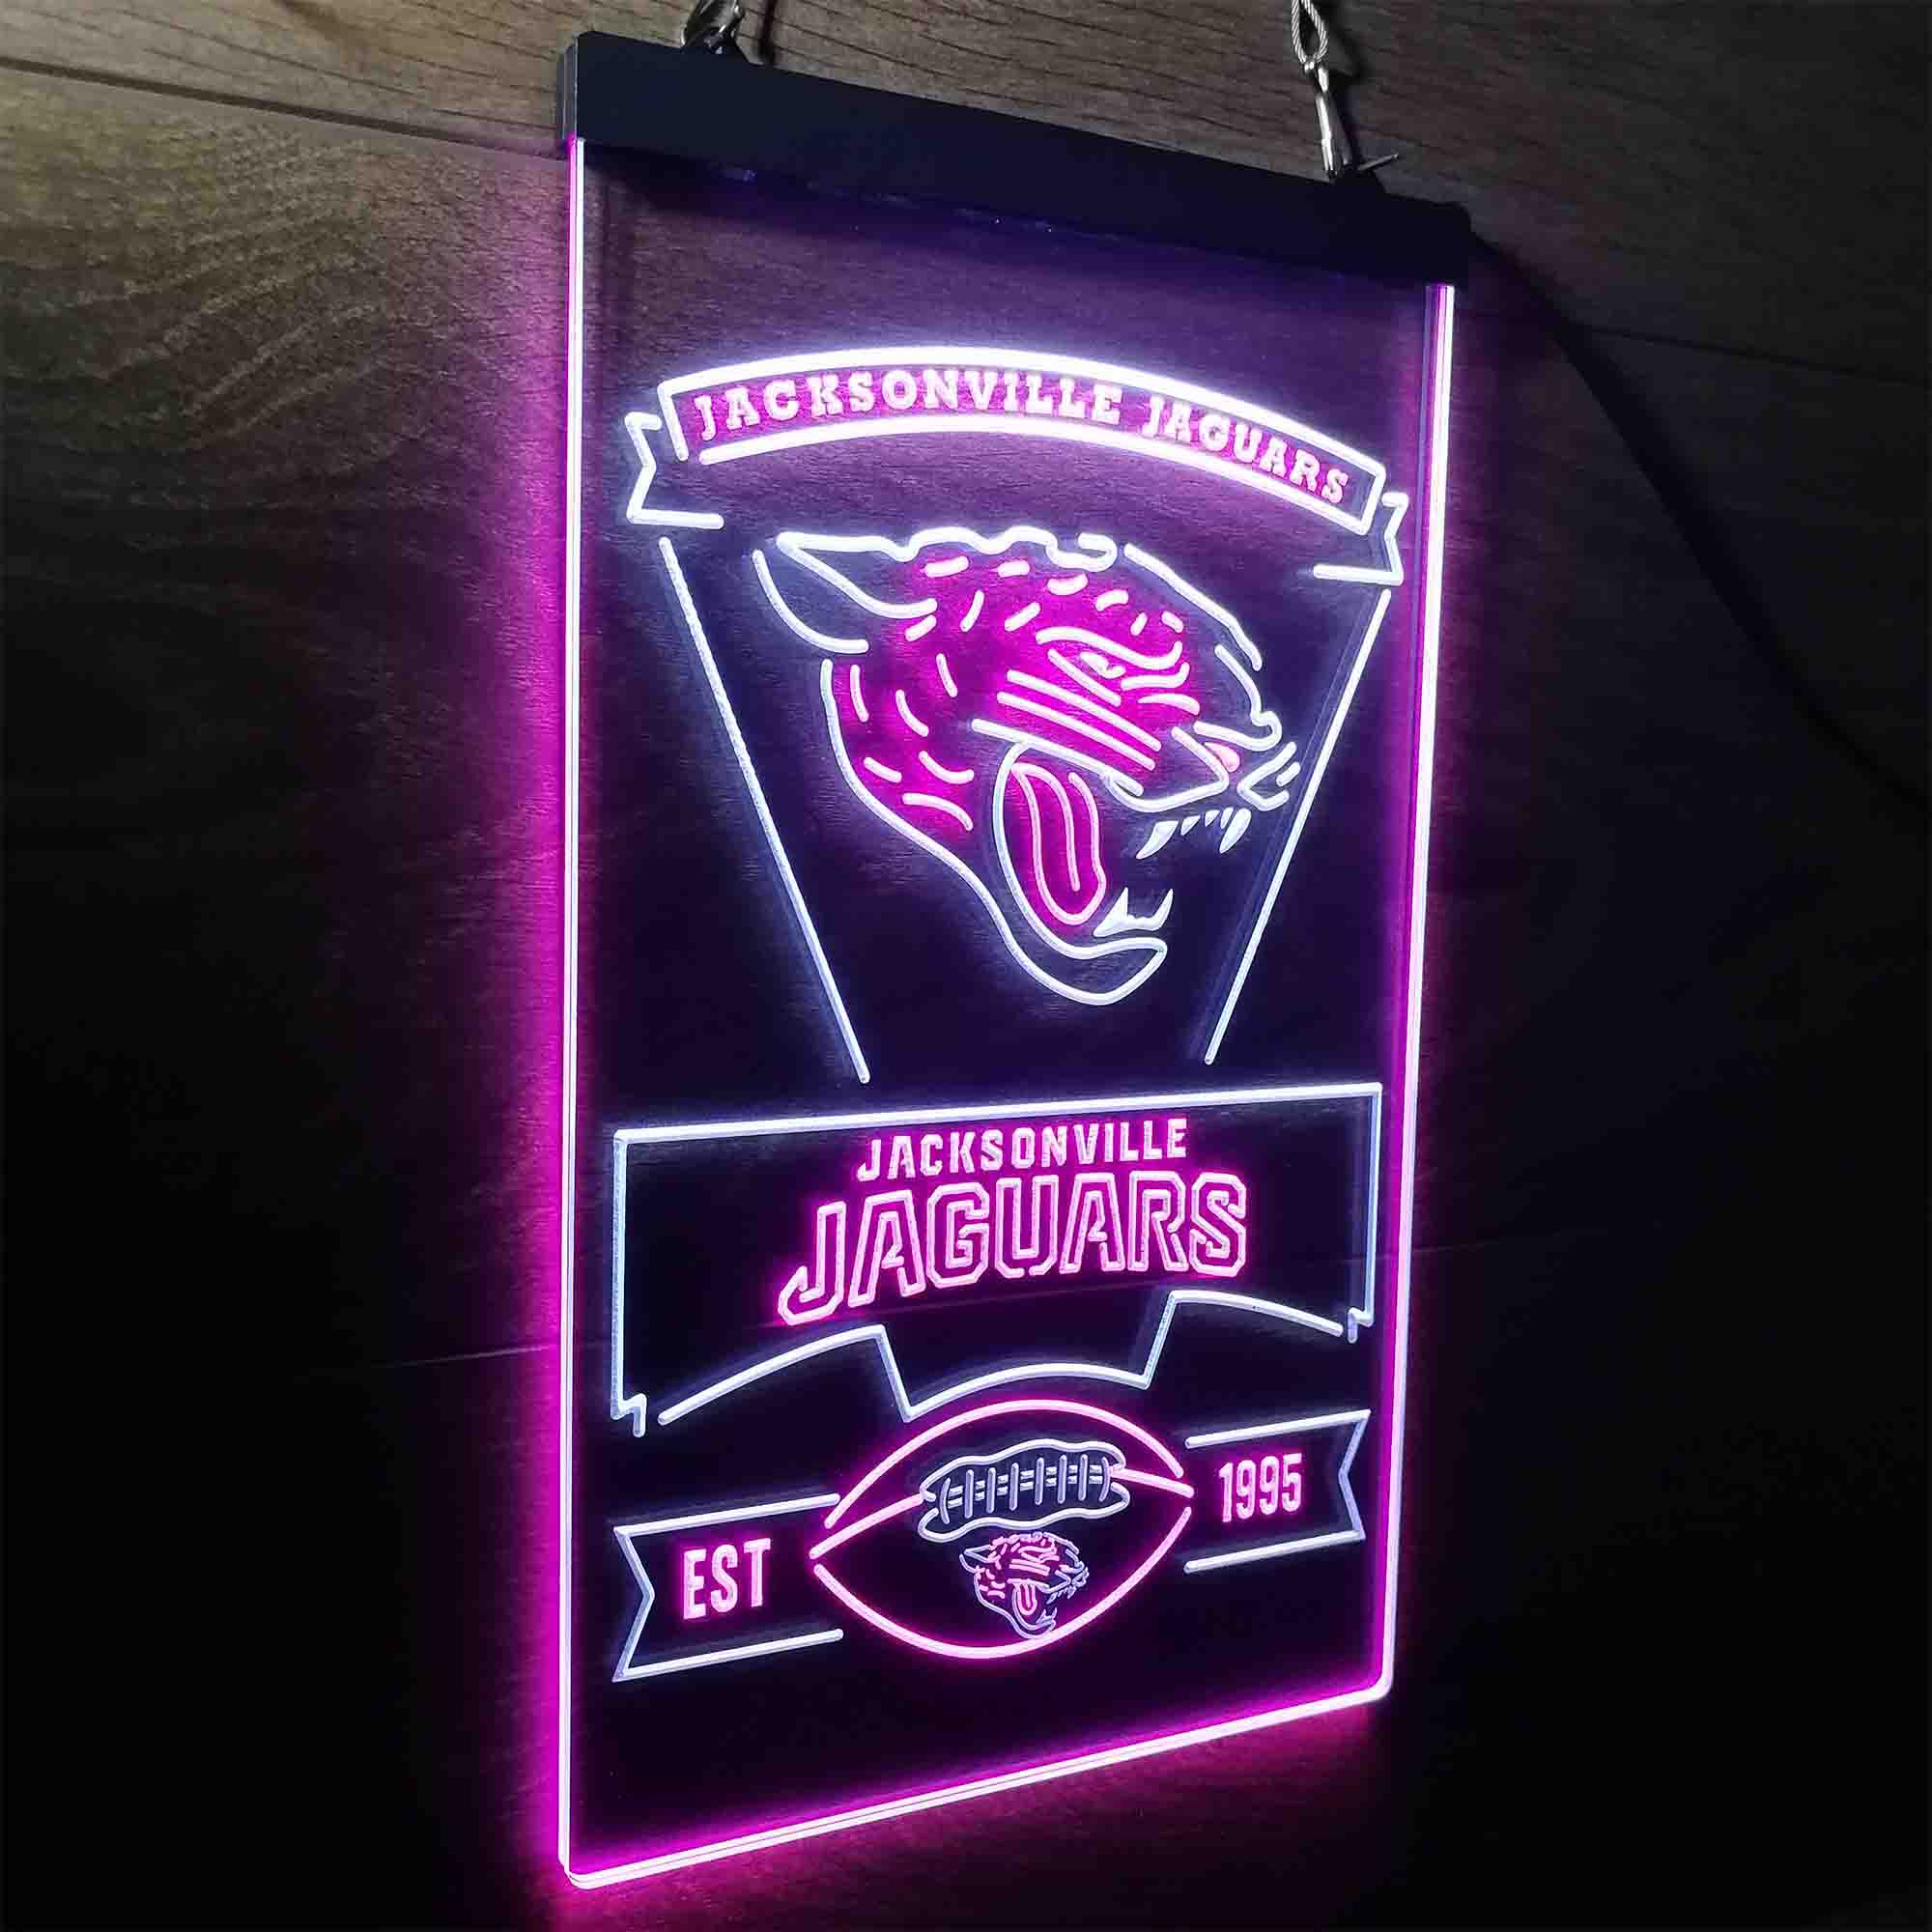 Jacksonville Jaguars Est. 1995 LED Neon Sign